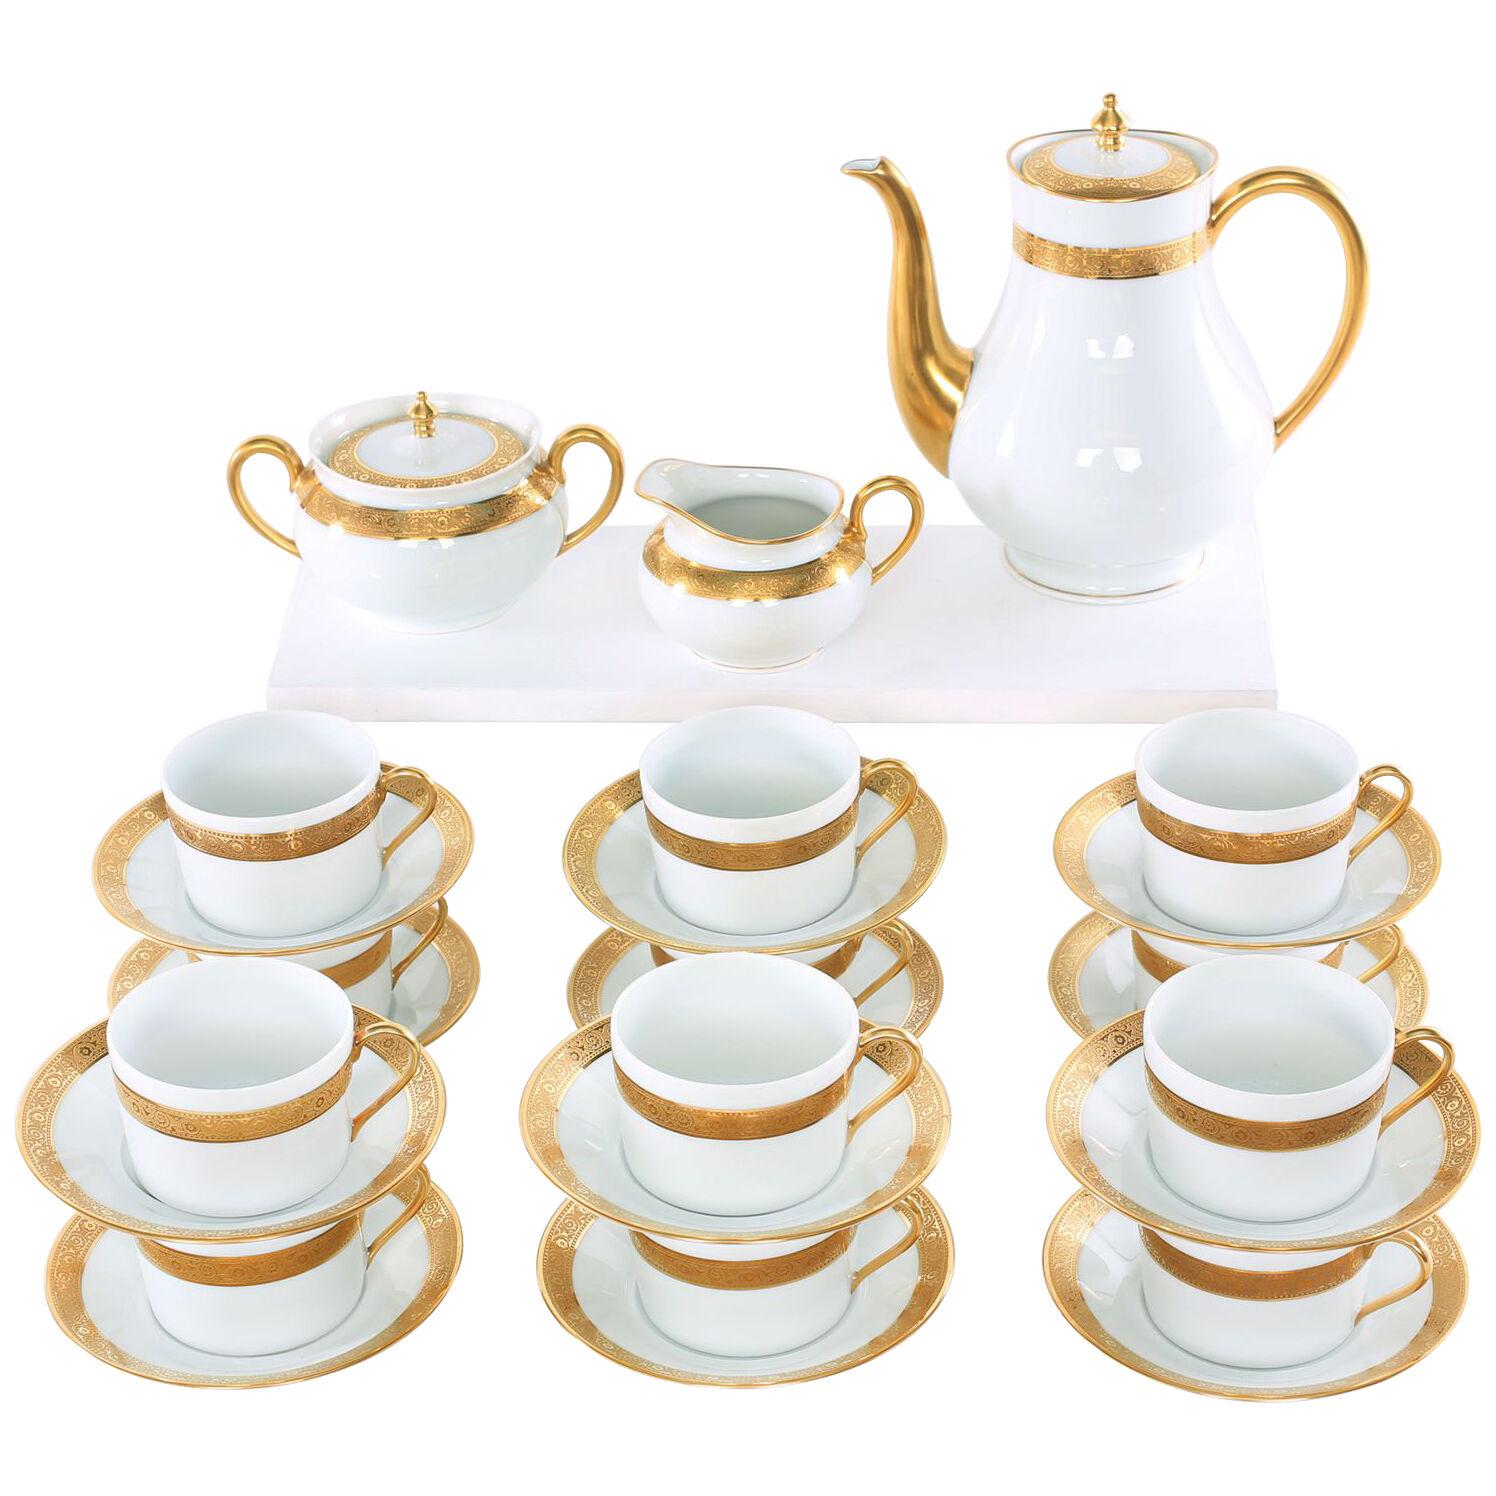 Late 20th Century Gilt Porcelain Coffee / Tea Service For 12 